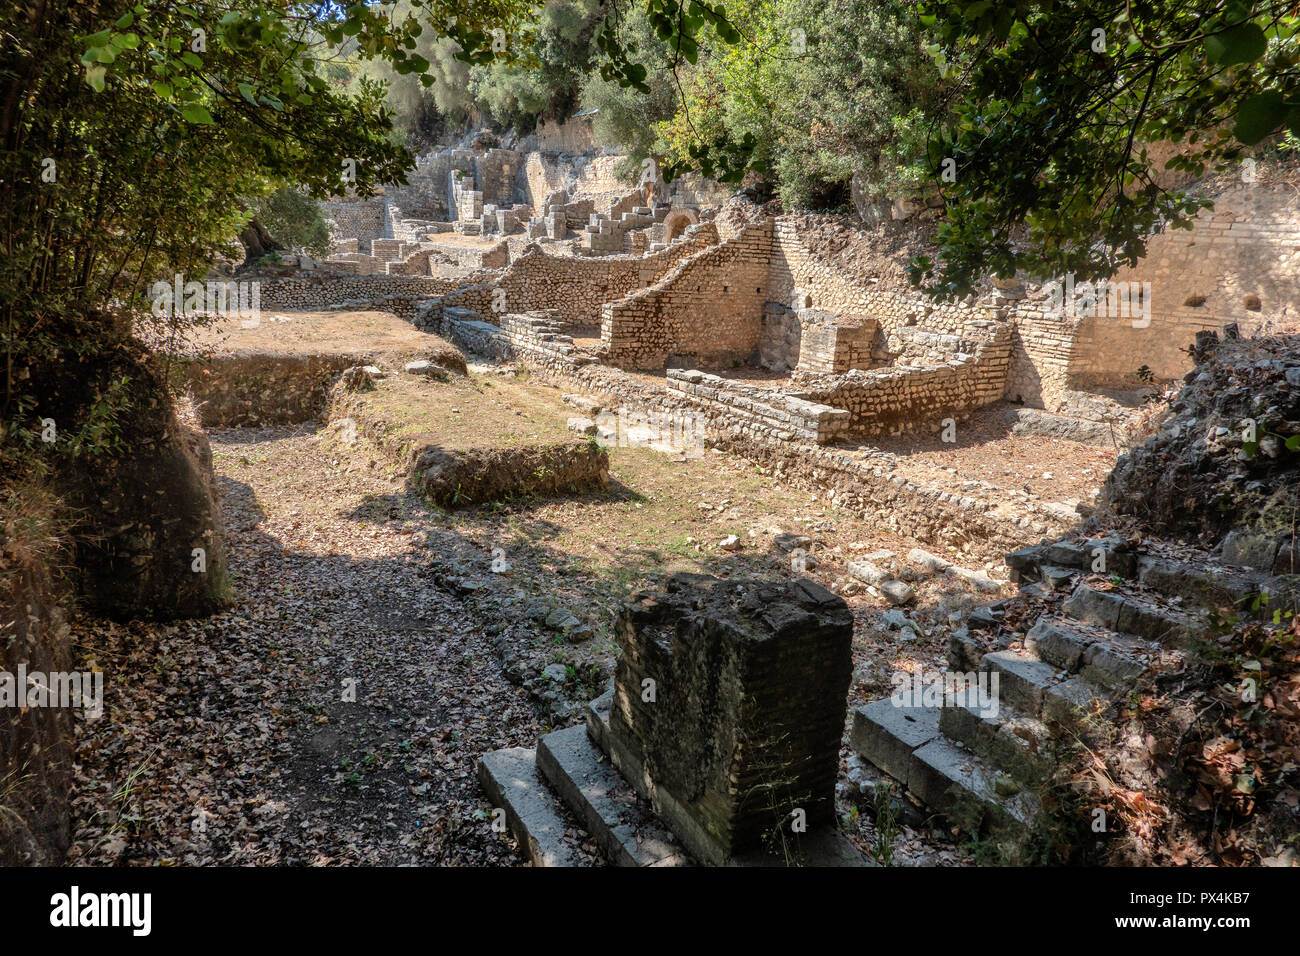 Roman forum in Butrint ancient city, Albania Stock Photo